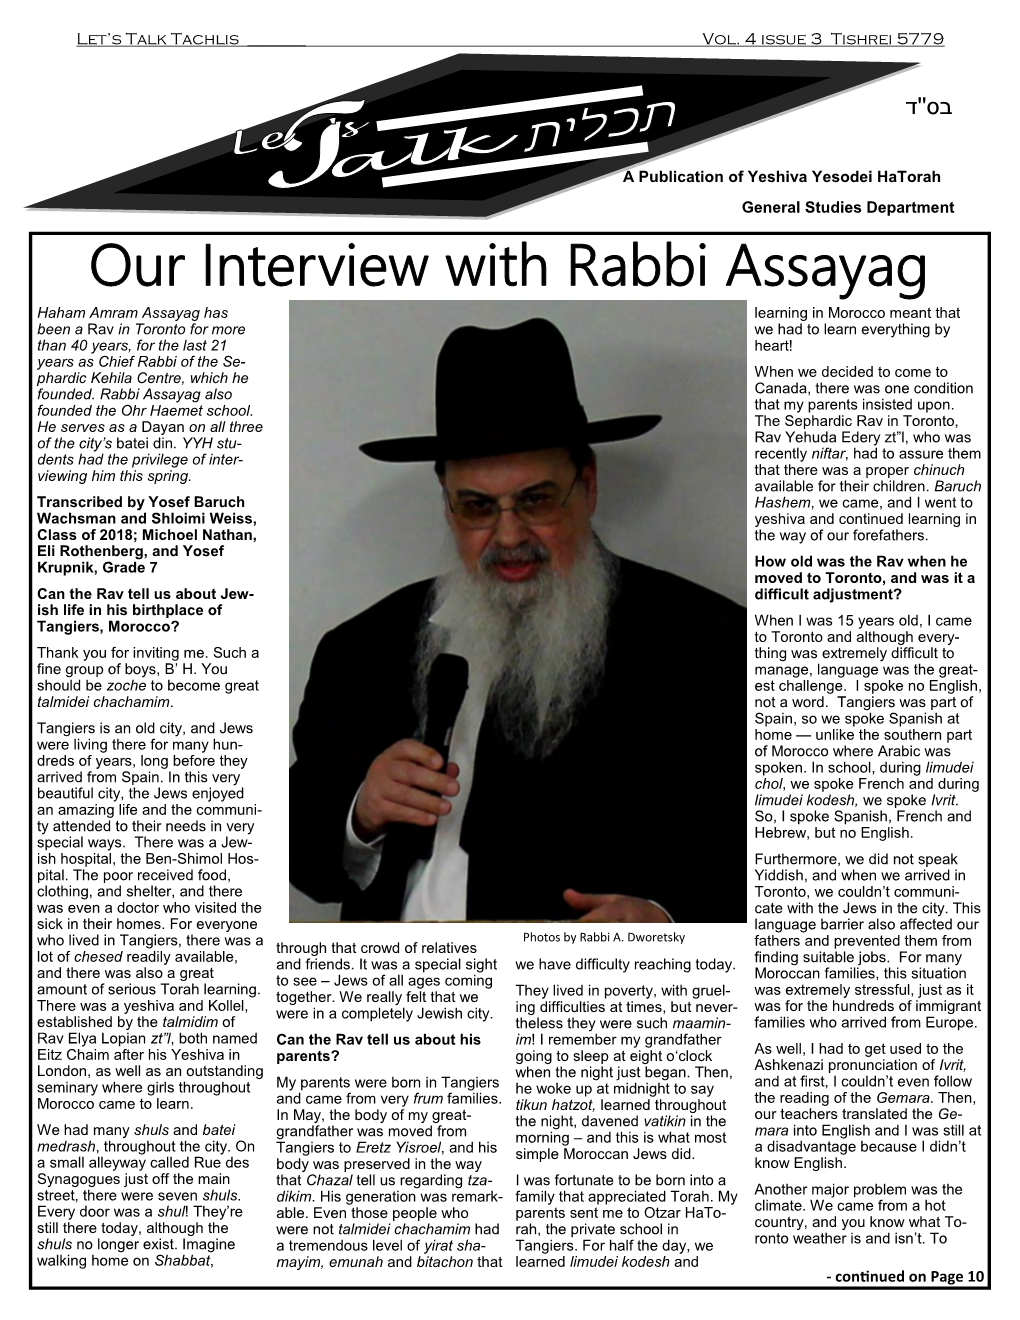 Our Interview with Rabbi Assayag